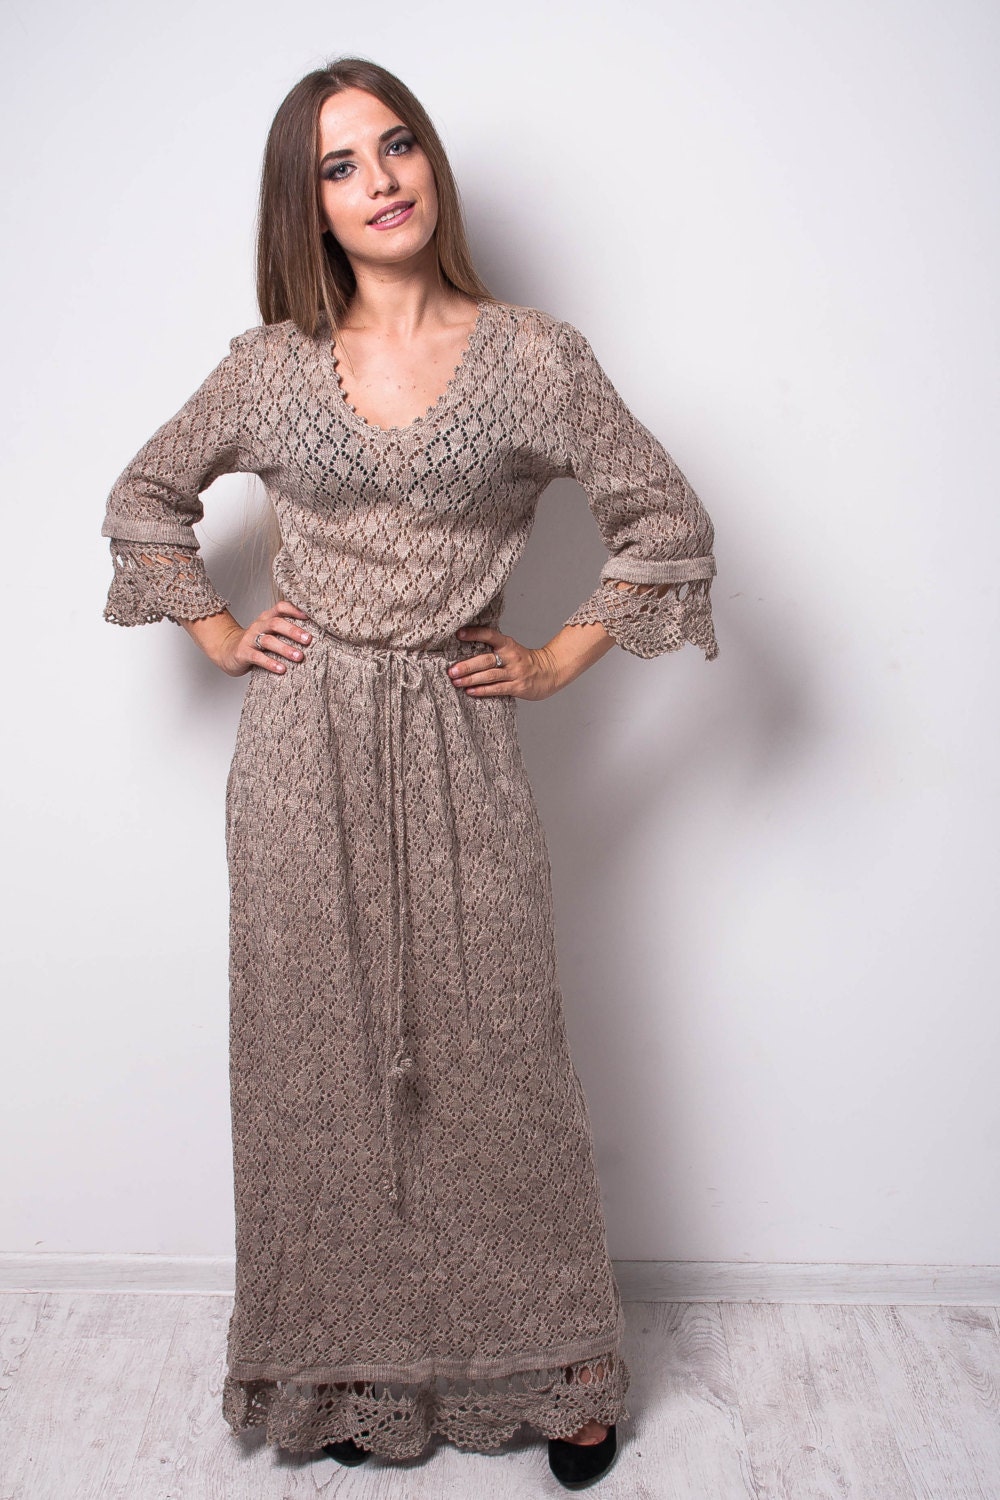 Crochet Dress Lace Beige Dress Incredible Knitted Lacy Dress - Etsy